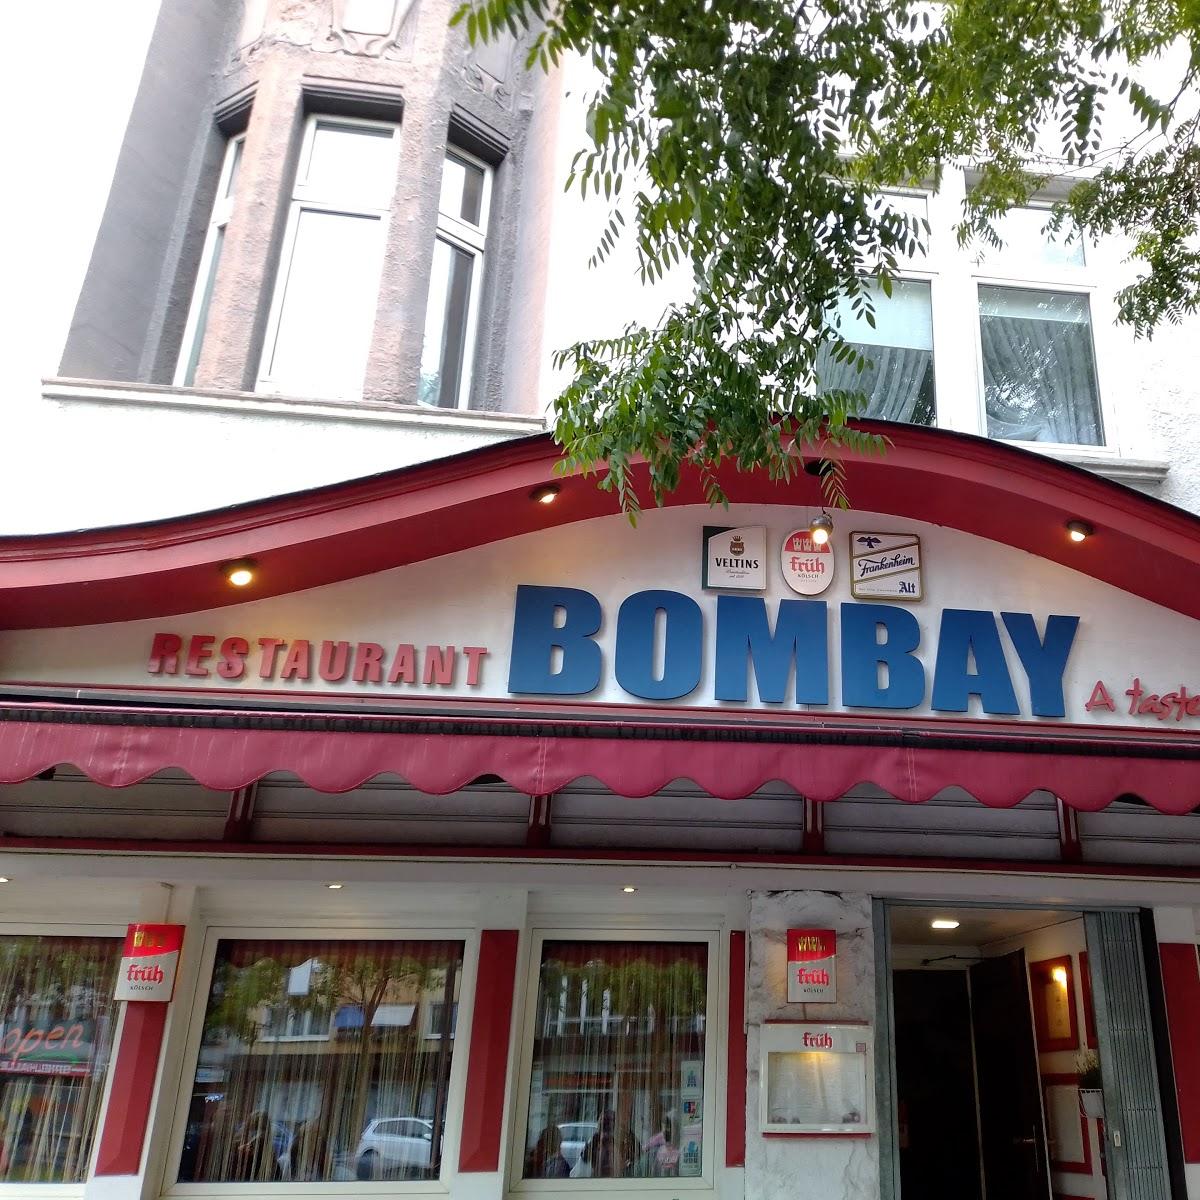 Restaurant "Restaurant Bombay" in Wuppertal